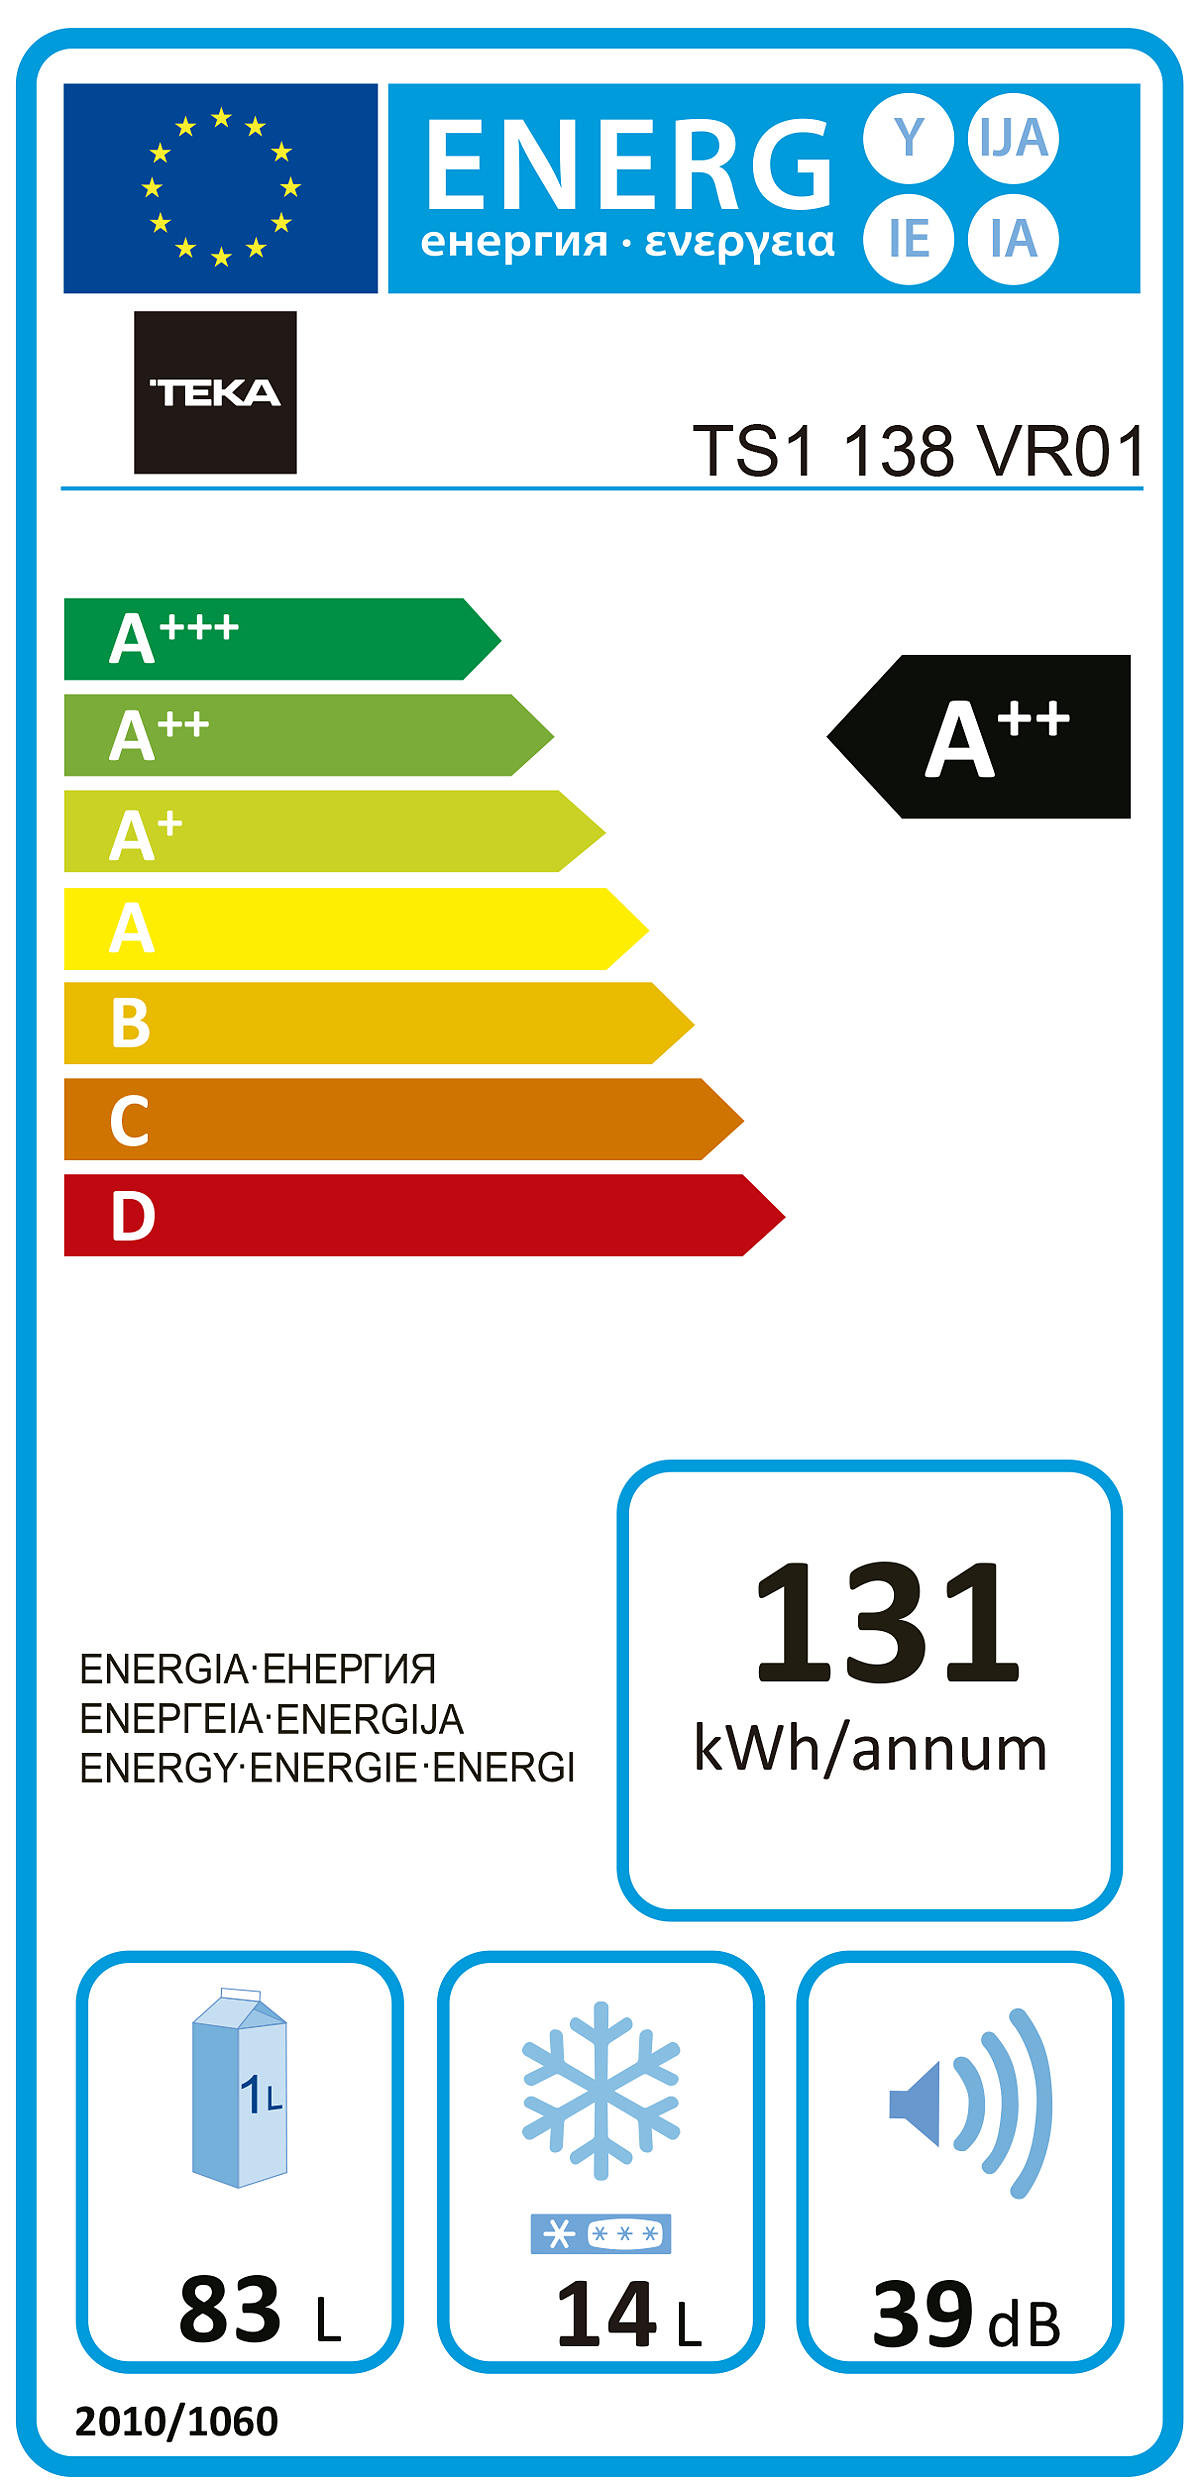 Eficiencia energética A++